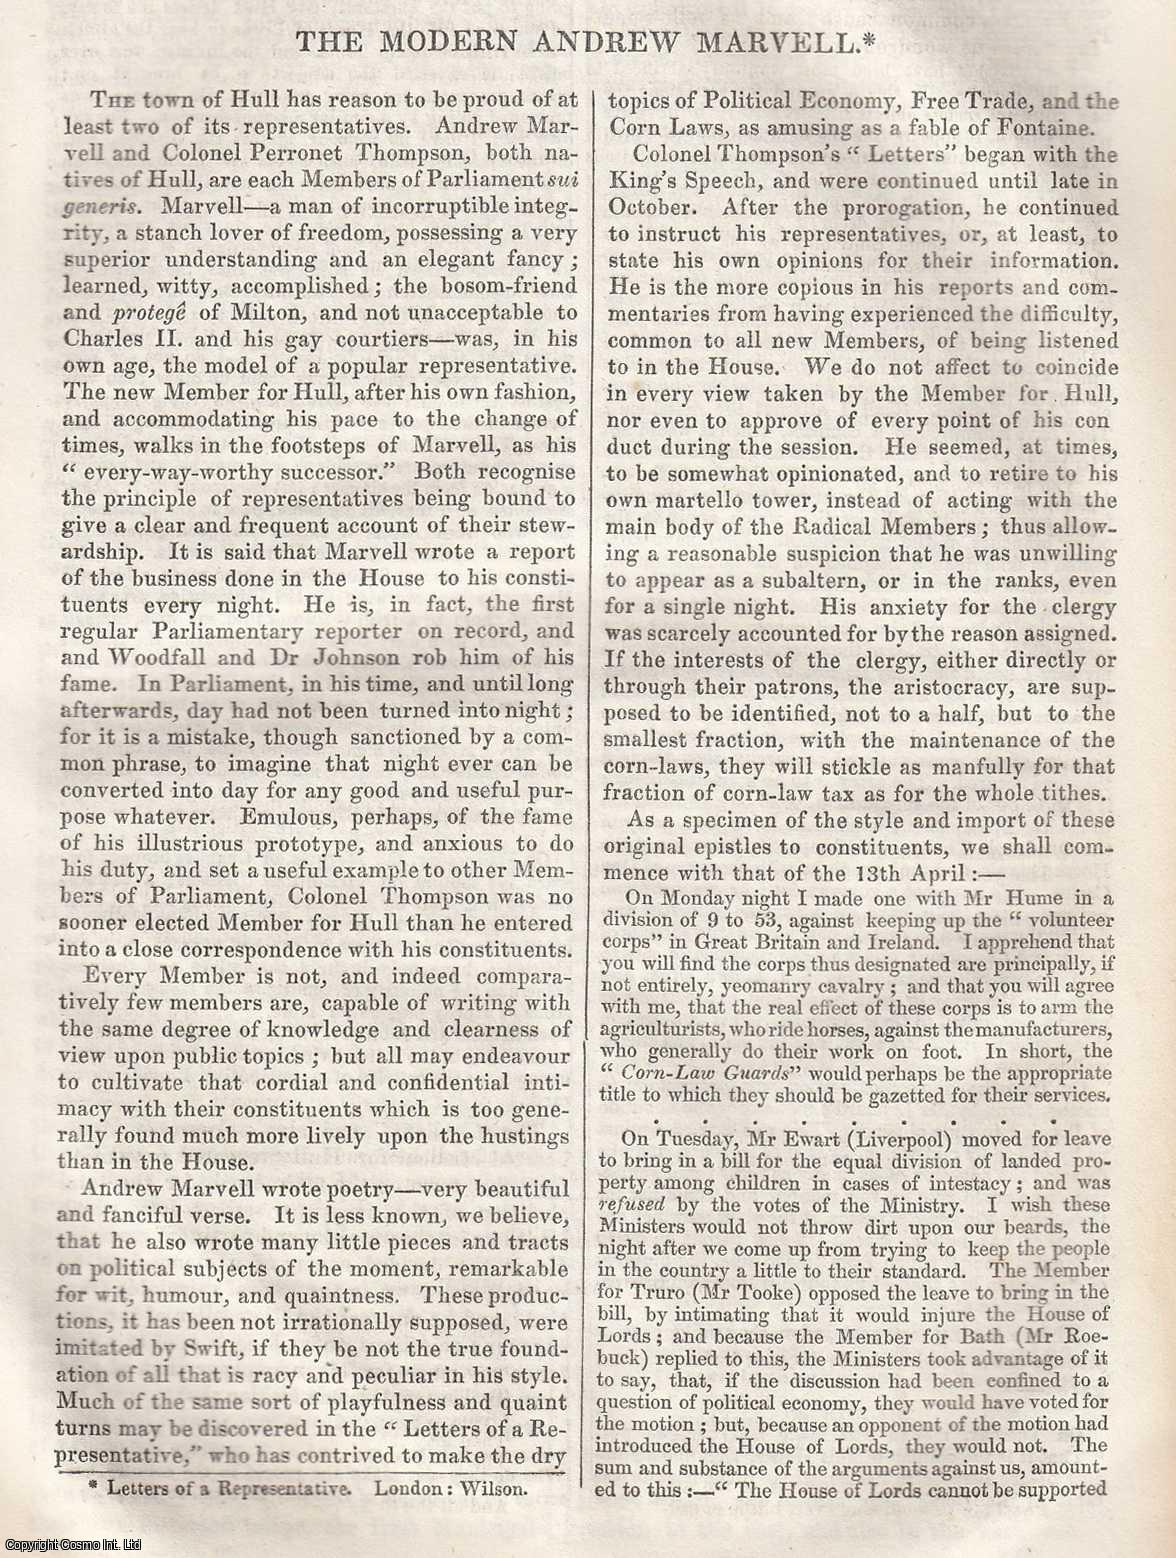 Johnstone, Christian - The Modern Andrew Marvell [On Perronet Thompson]. An original article from Tait's Edinburgh Magazine, 1836.